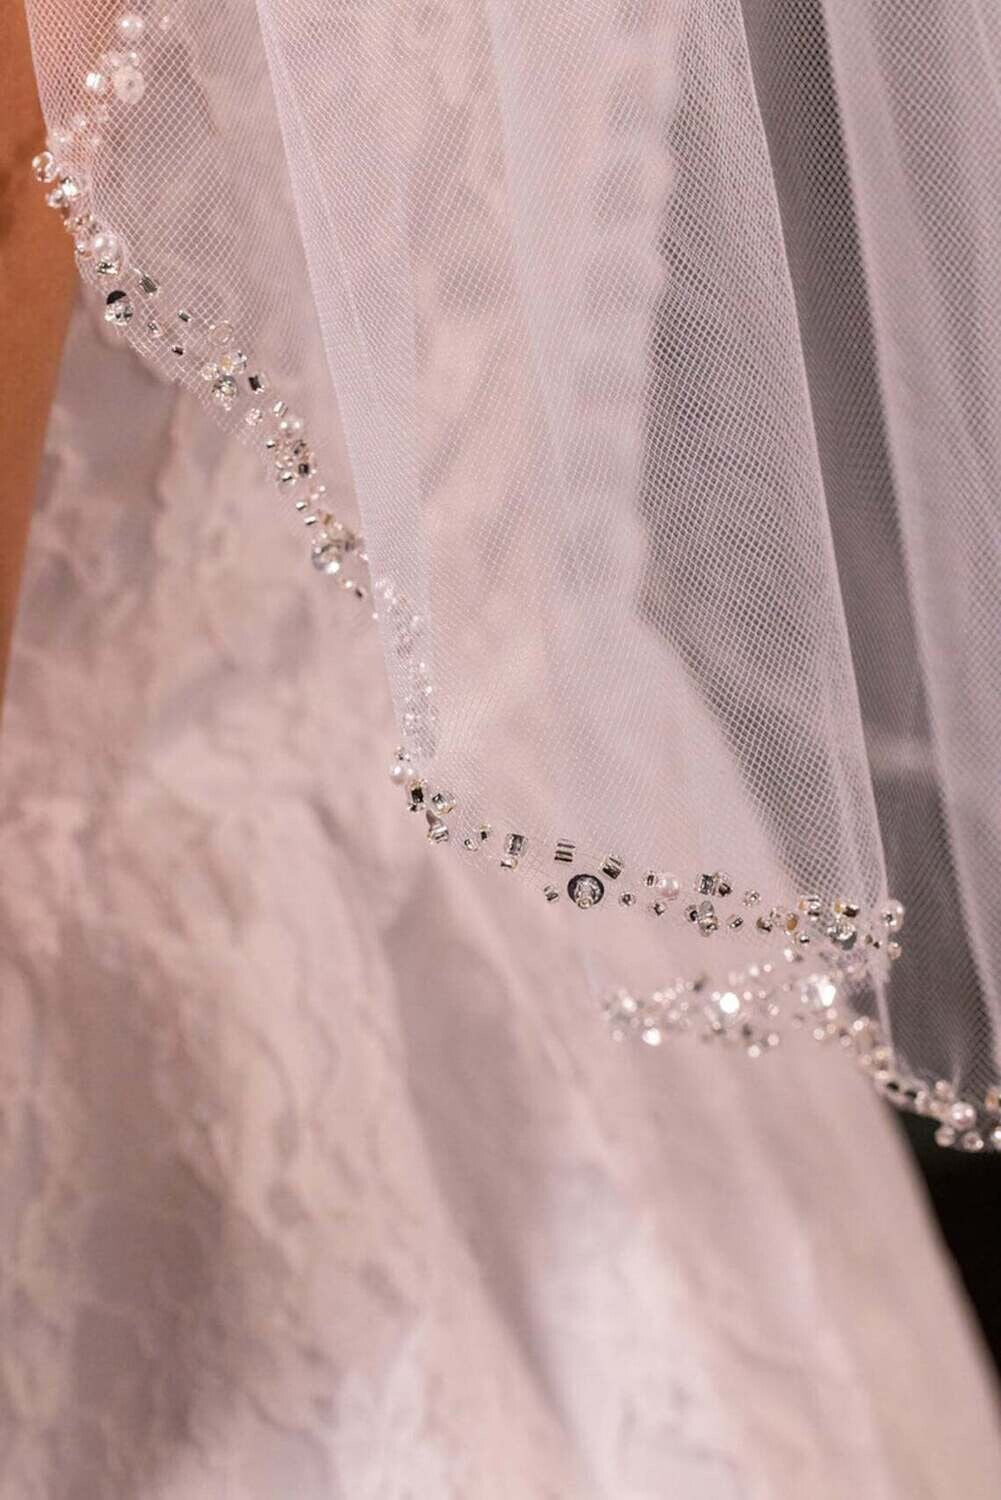 MariaElena-Beautiful crystal pearl communion headpiece and veil